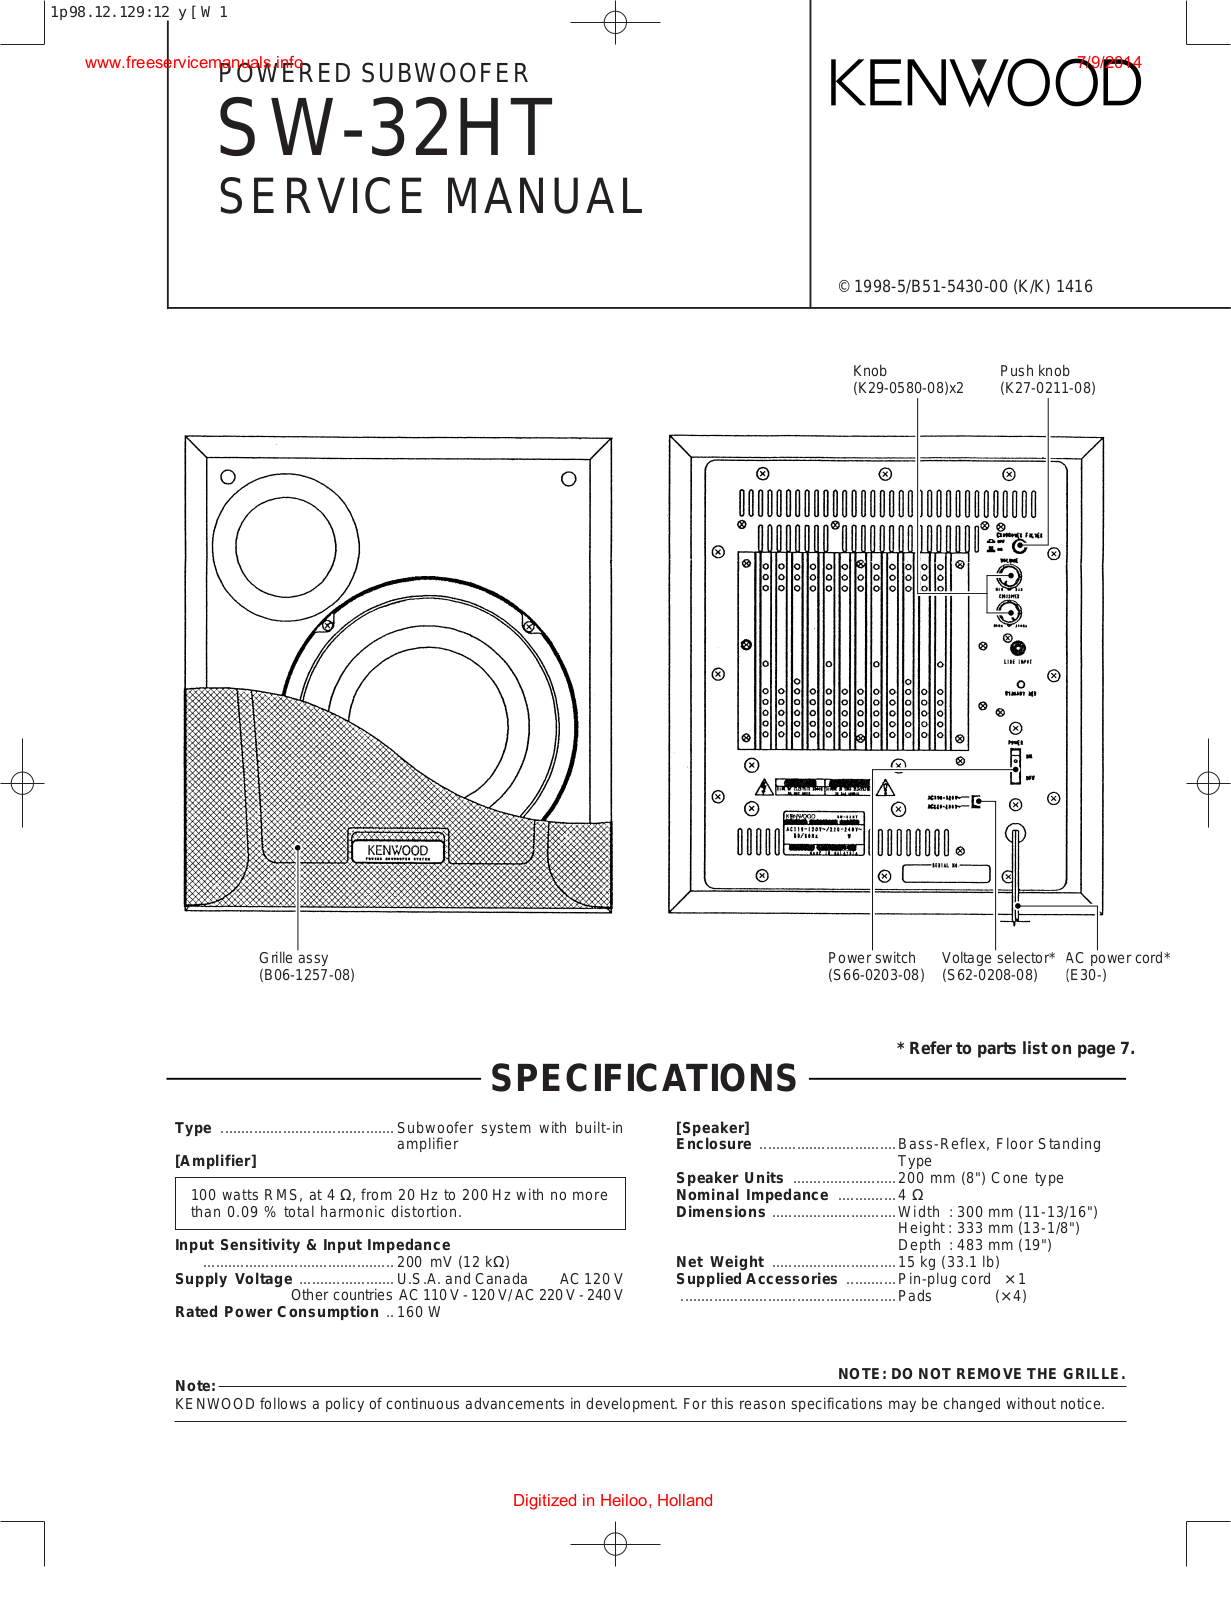 Kenwood Sw-32ht Service Manual